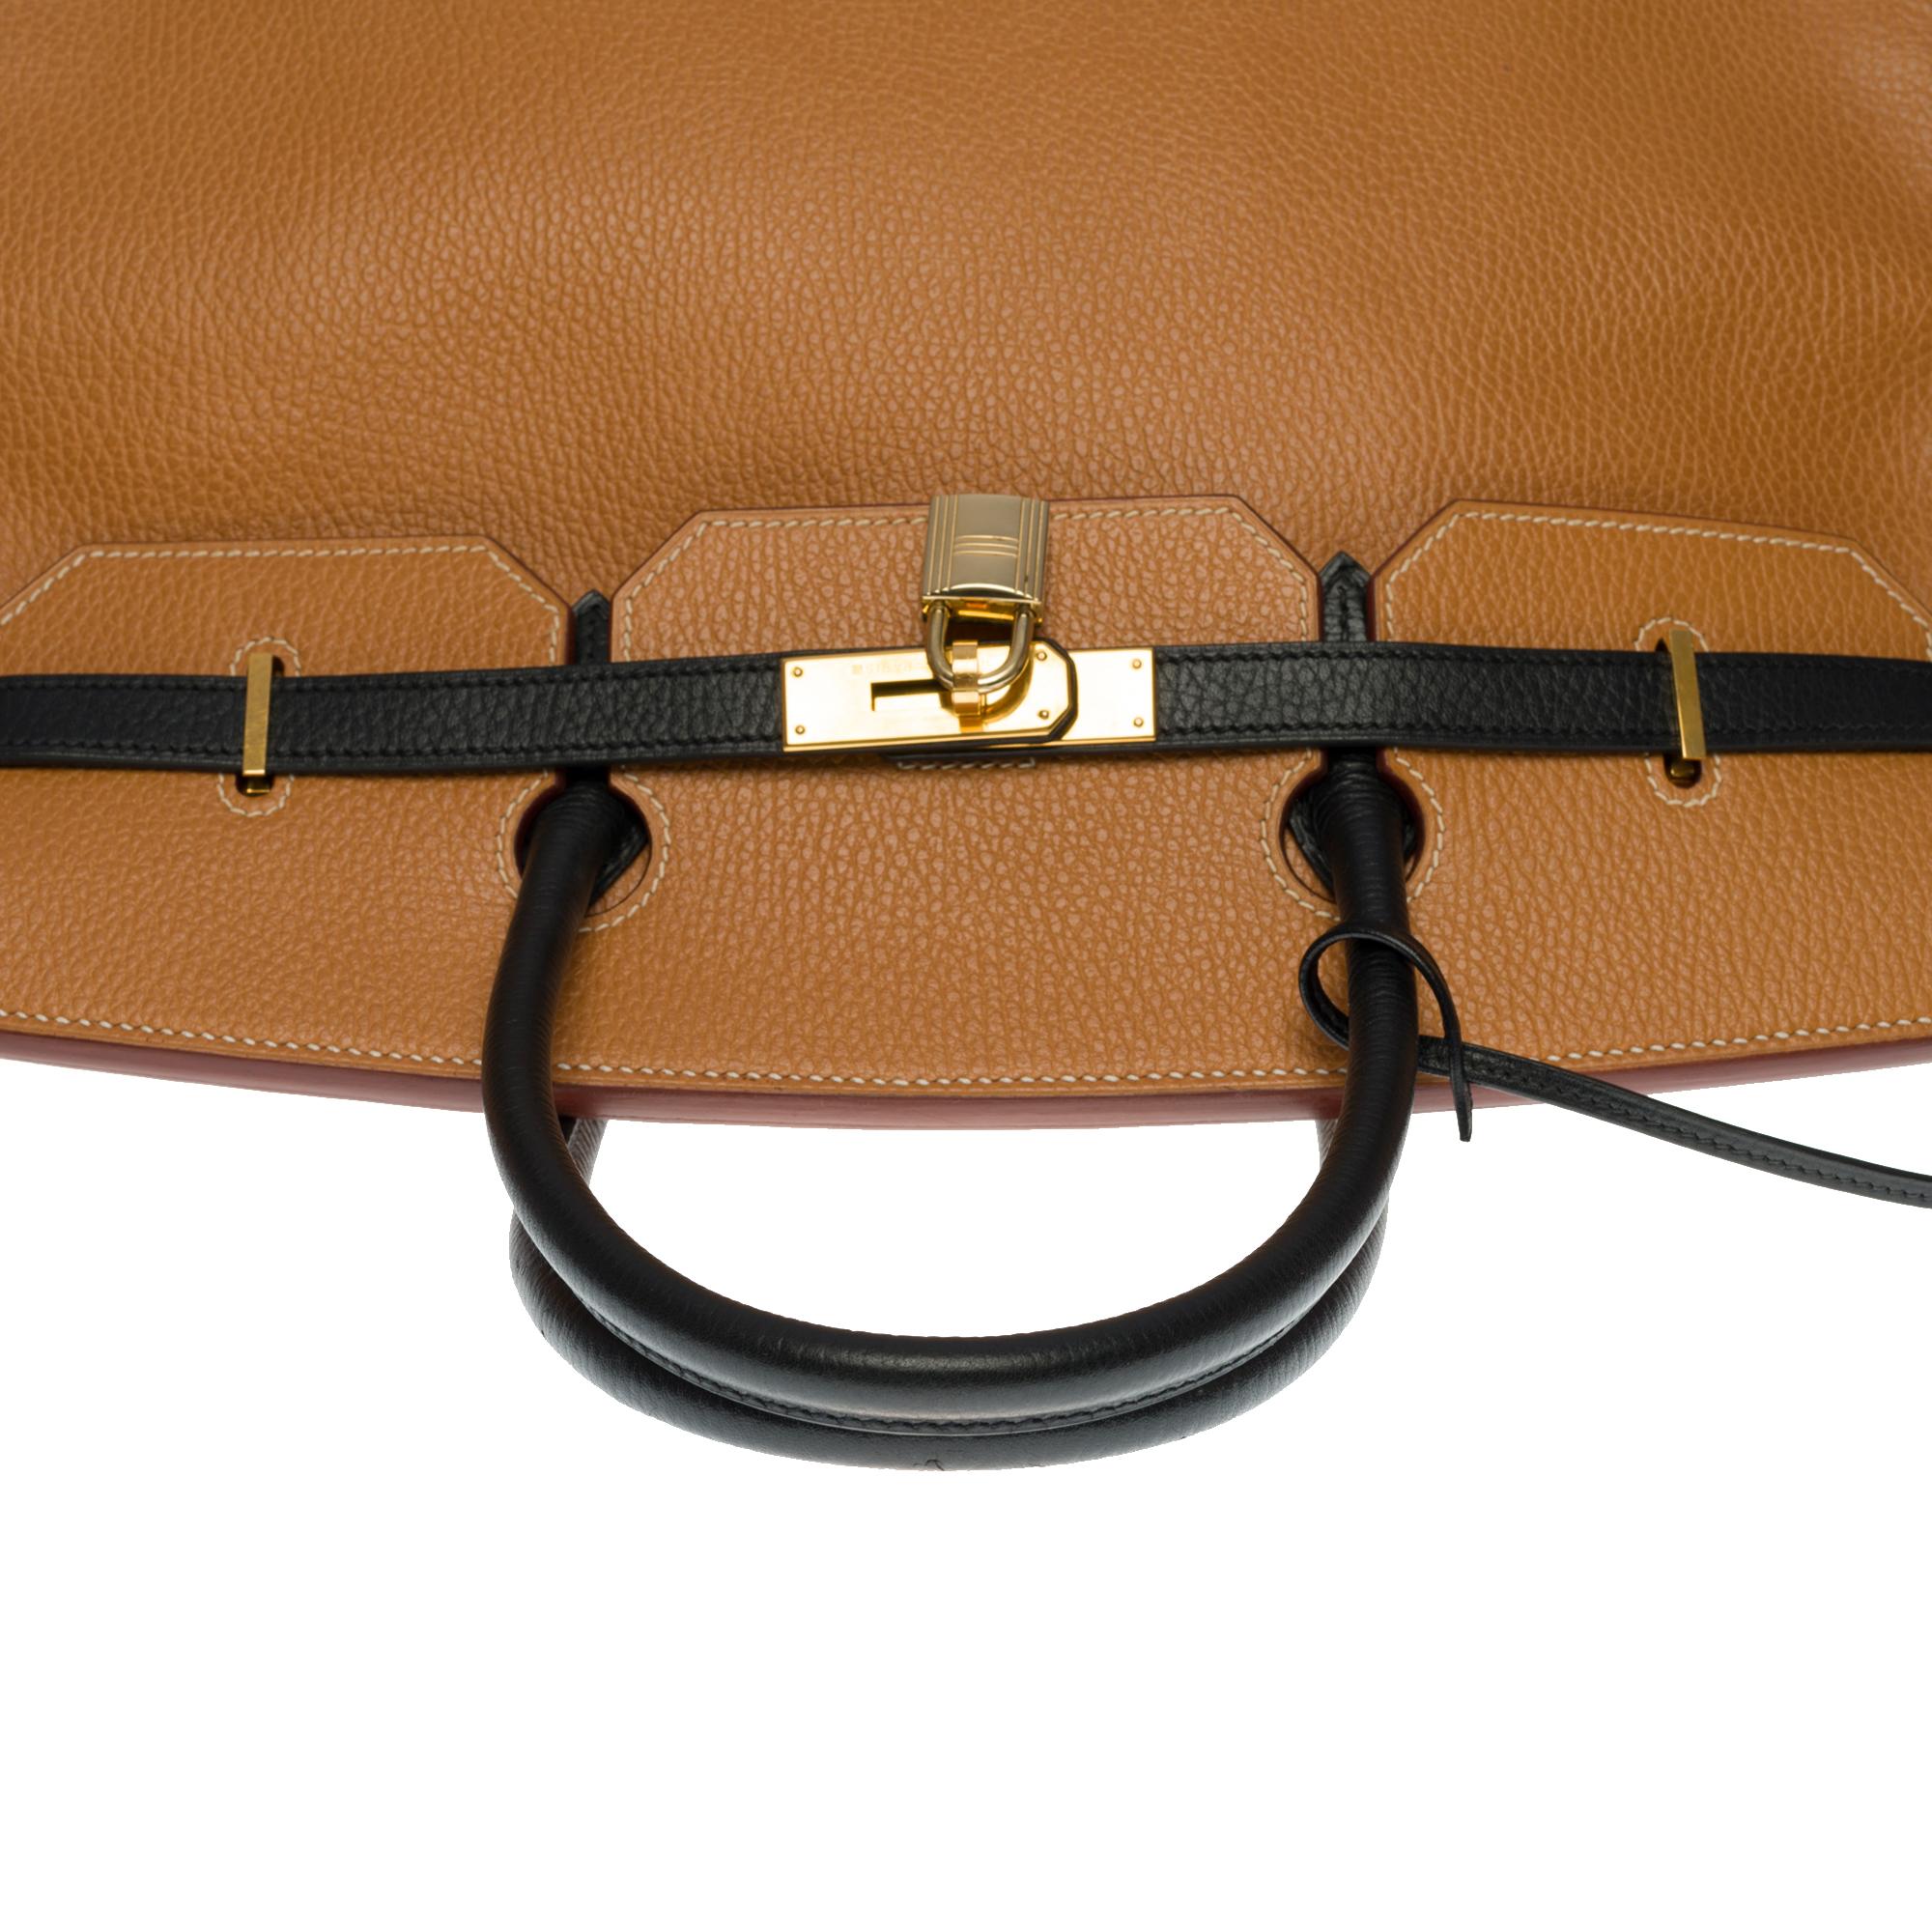 Rare Hermes Birkin 40cm handbag in Gold & black Vache Ardenne leather, GHW 2